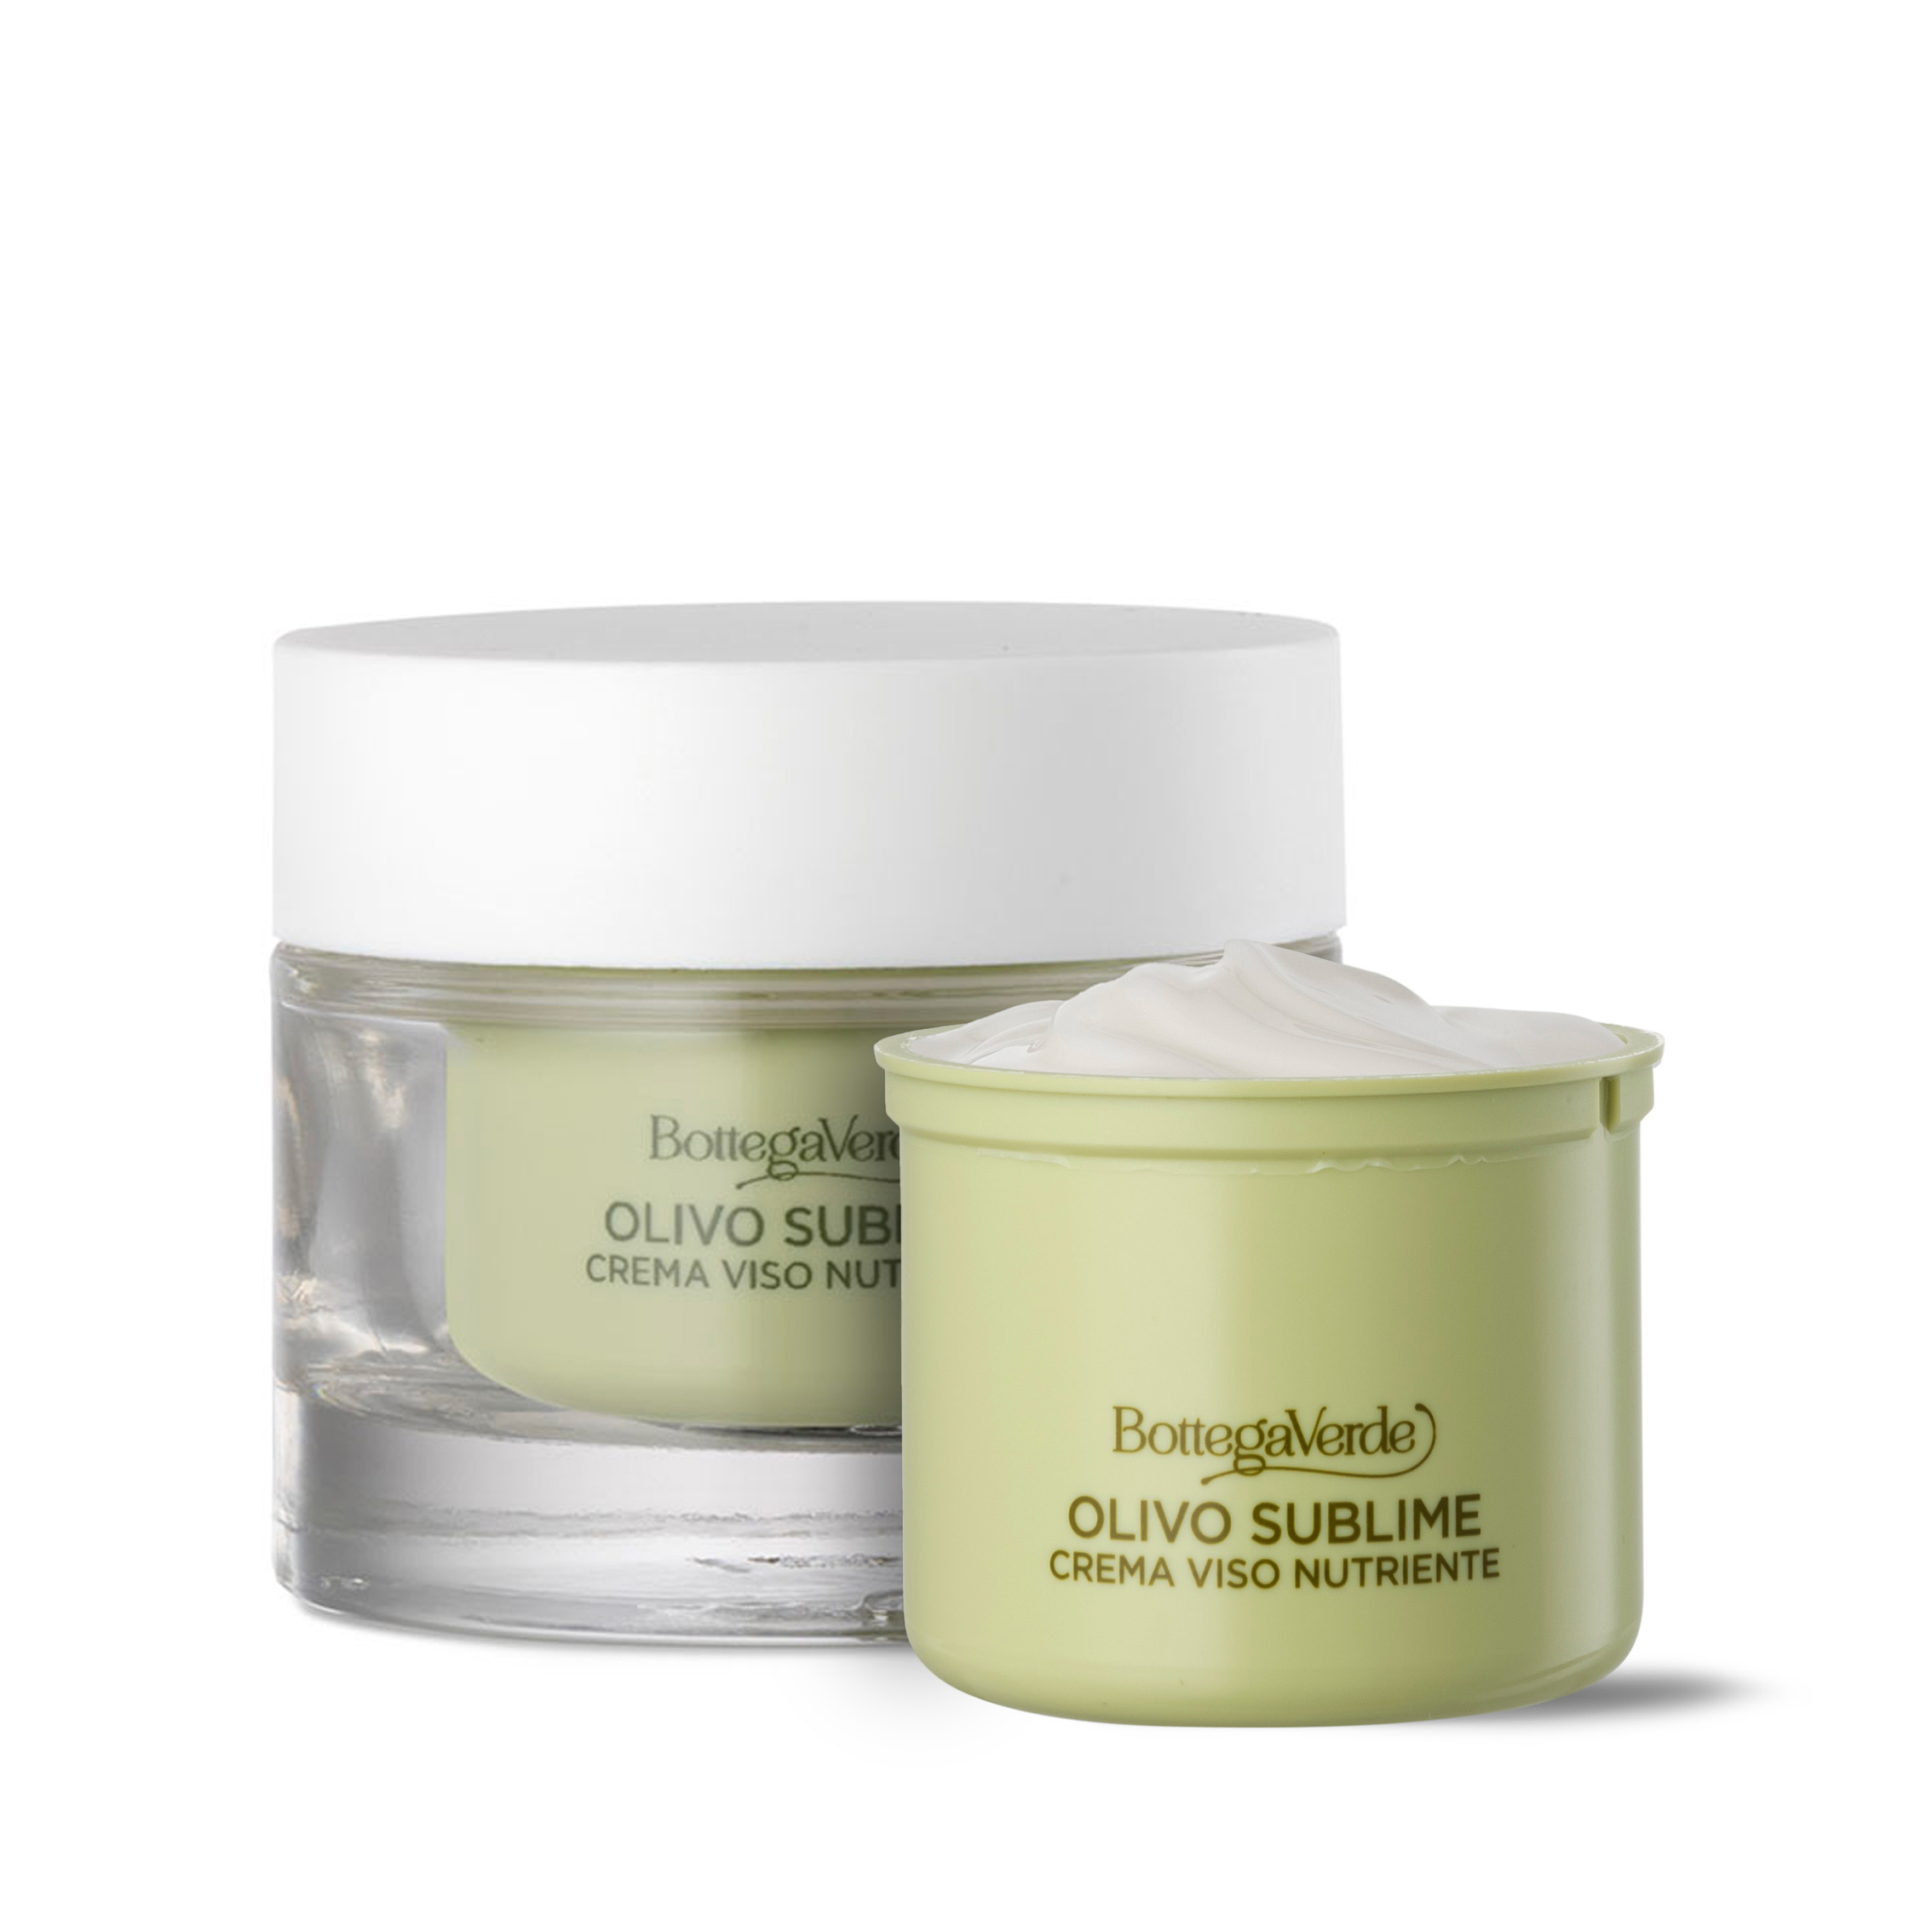 Offerta Olivo Sublime - Crema viso nutriente emolliente + Crema viso - ricarica (50 ml)